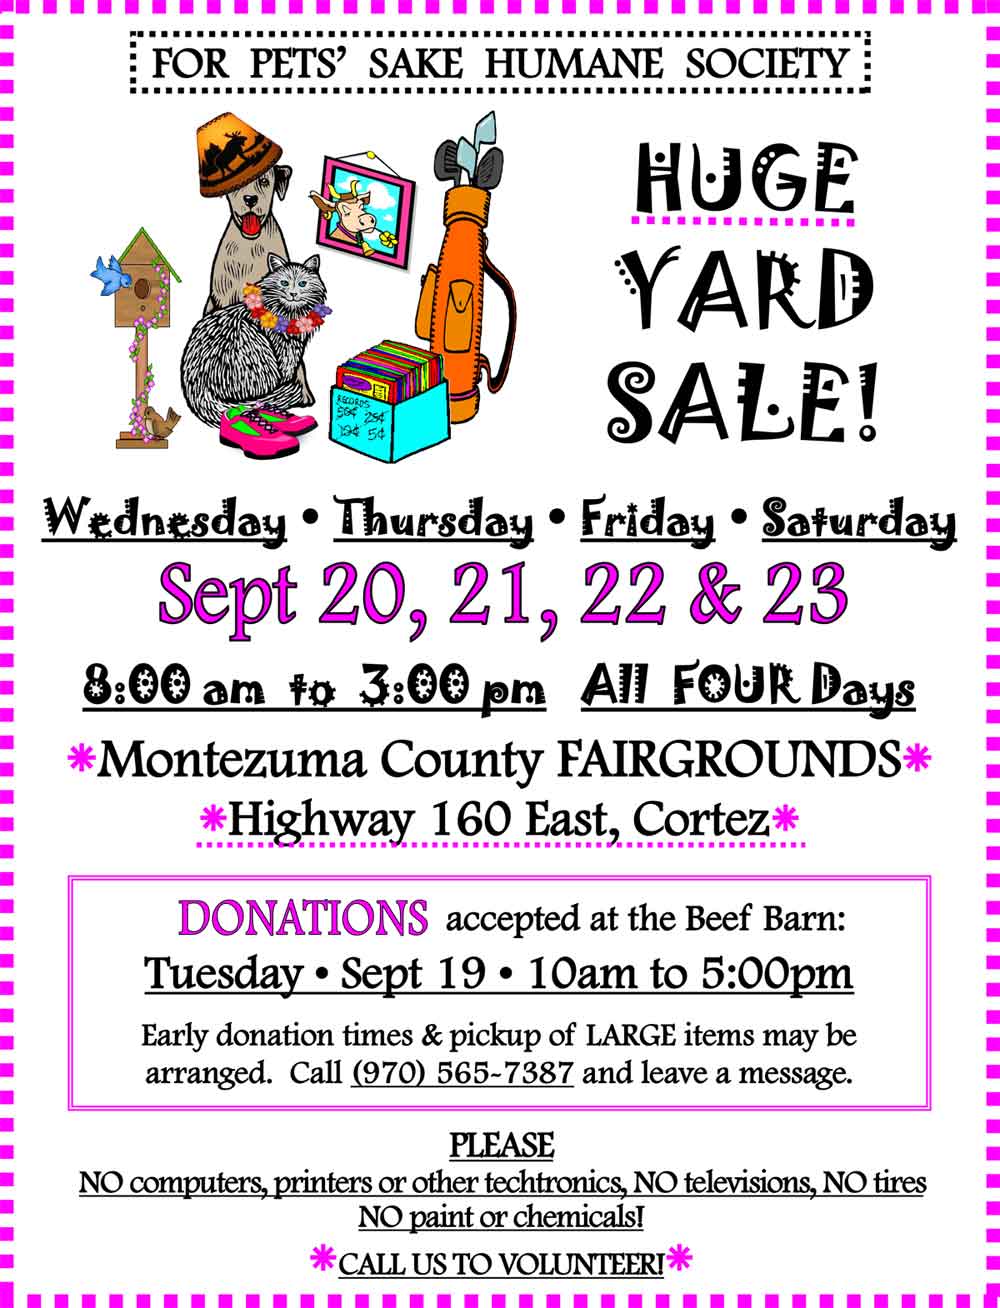 2023 Yard Sale Flyer September 20-21-22-23 8am - 3pm each day at Montezuma County Fairgrounds Beef Barn